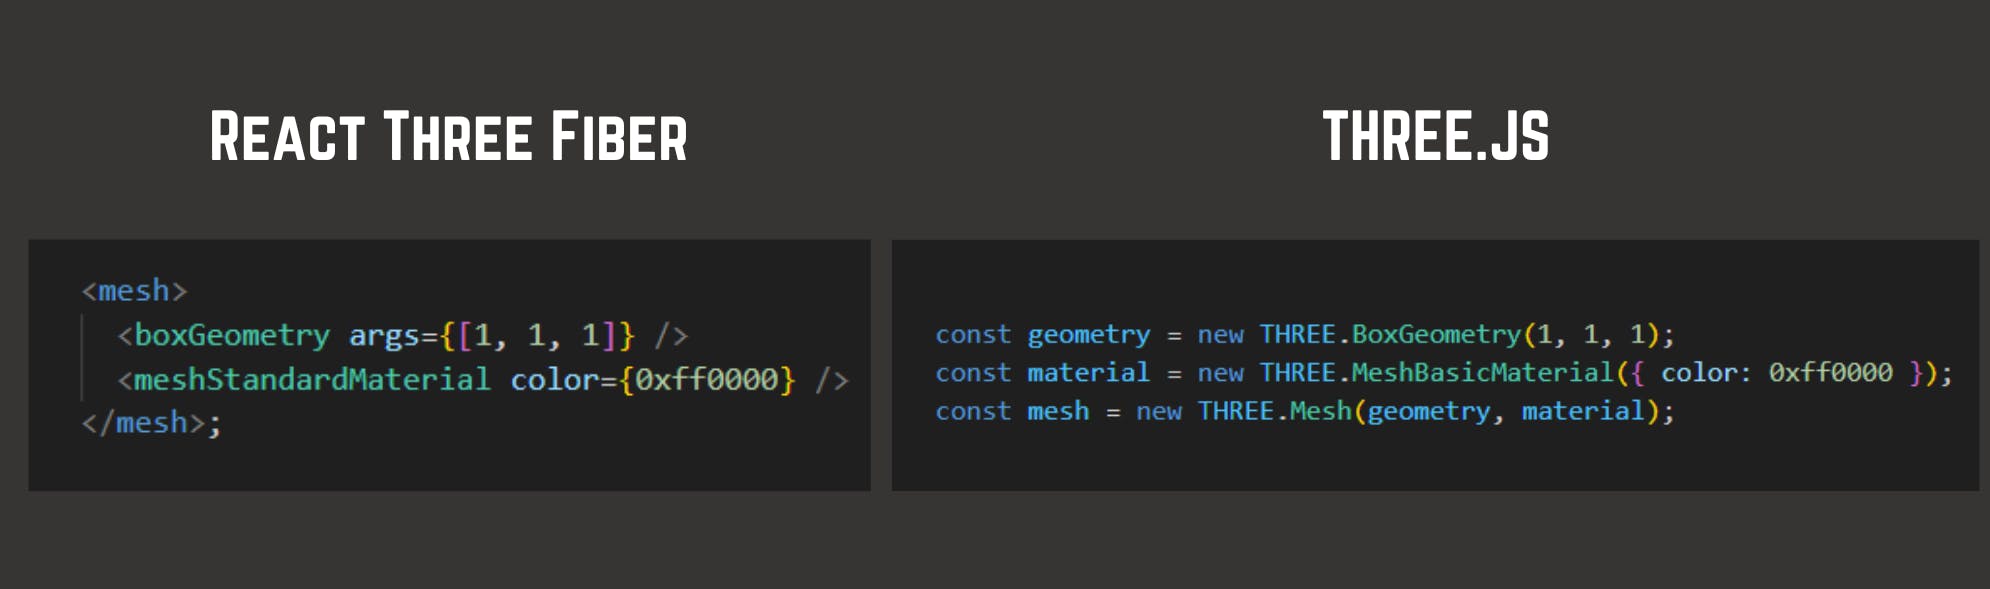 Code for creating mesh in React Three Fiber vs Three.js